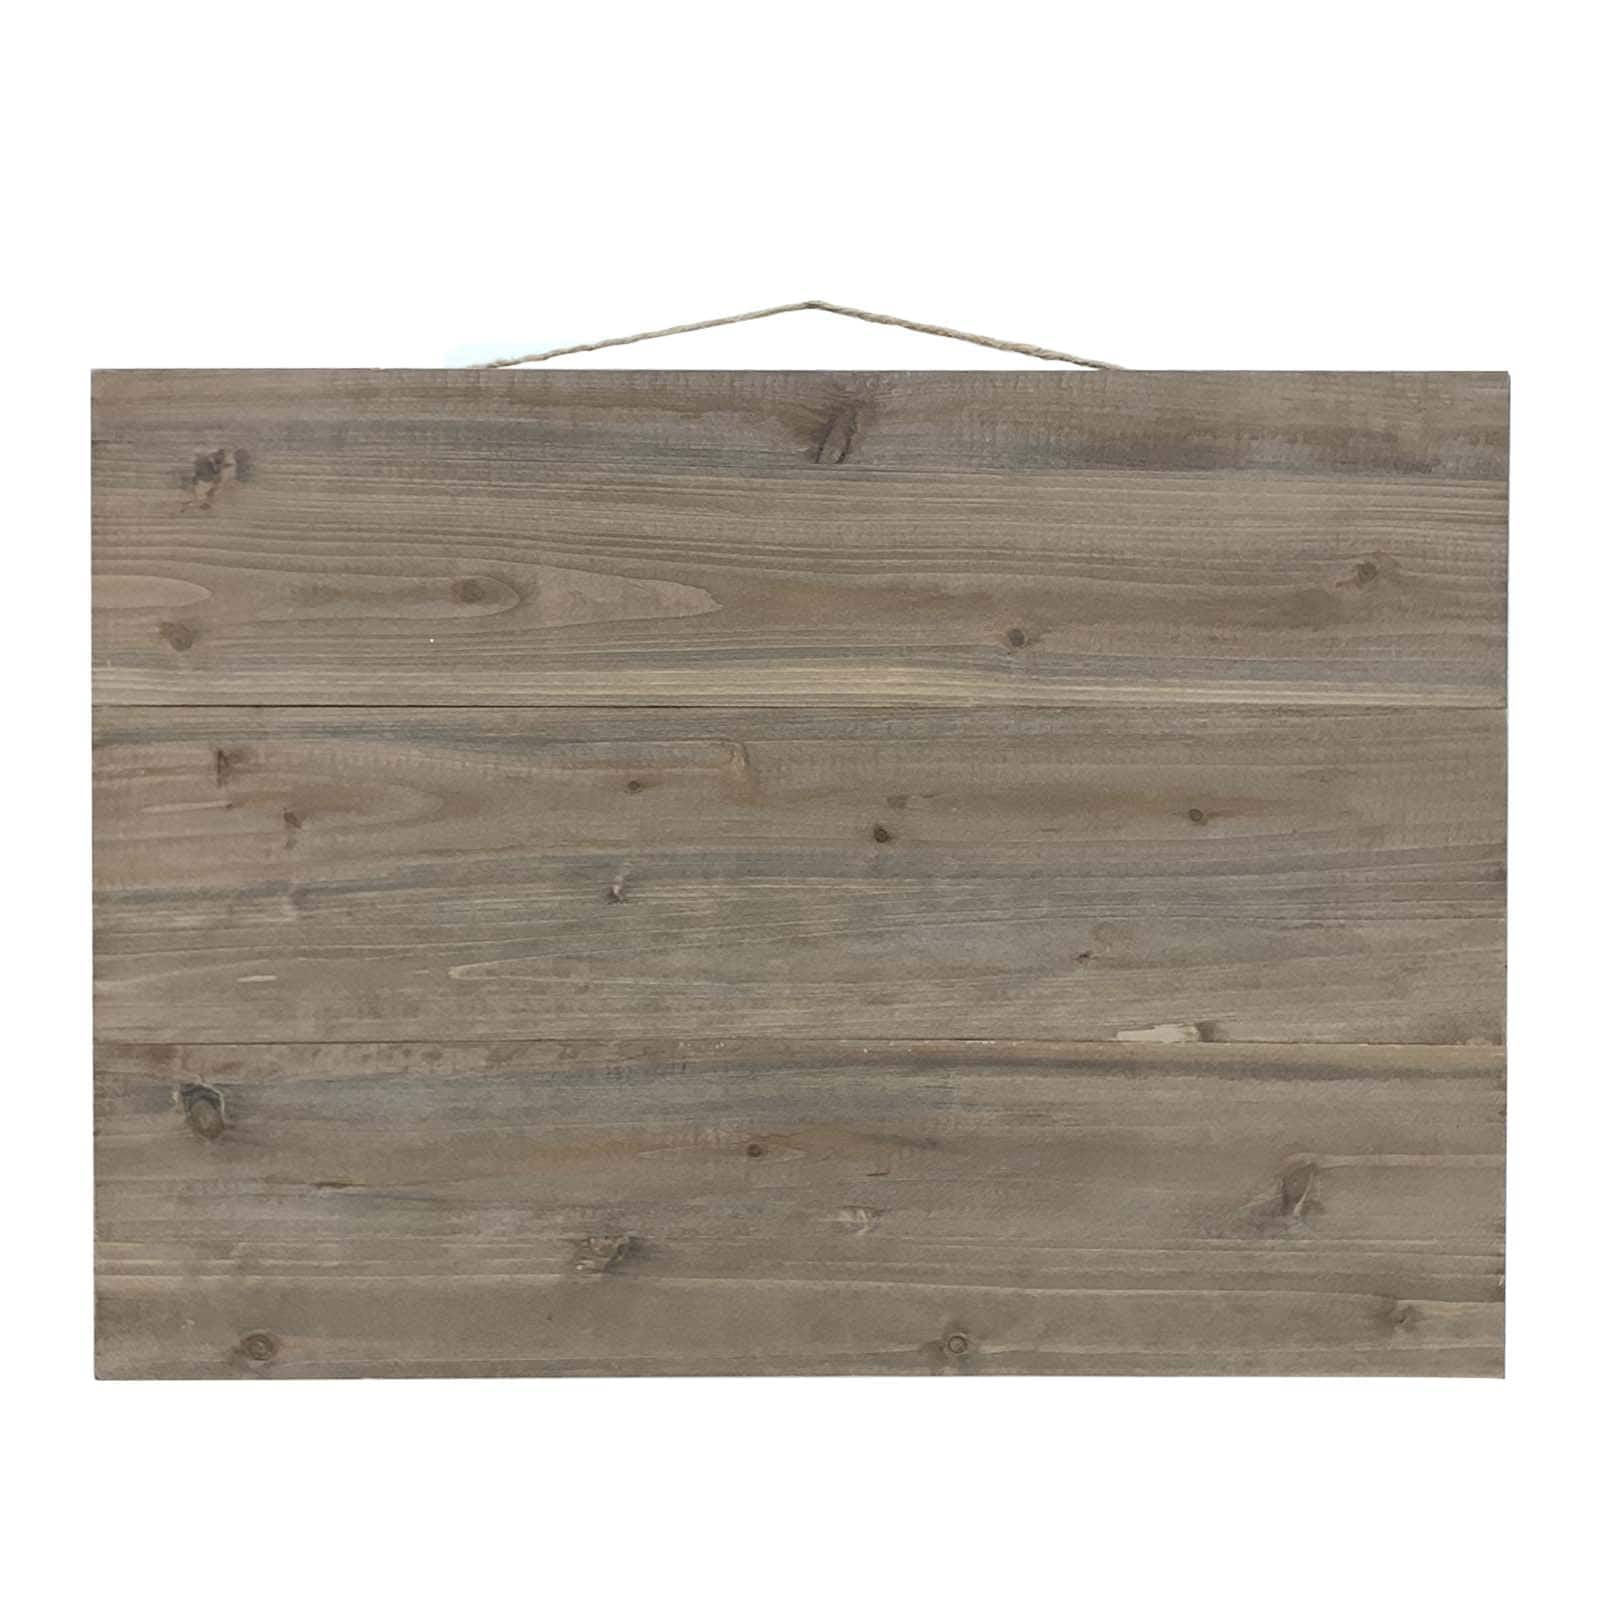 Good Wood by Leisure Arts Shape Star Birch 11.5 x 11 x 0.5